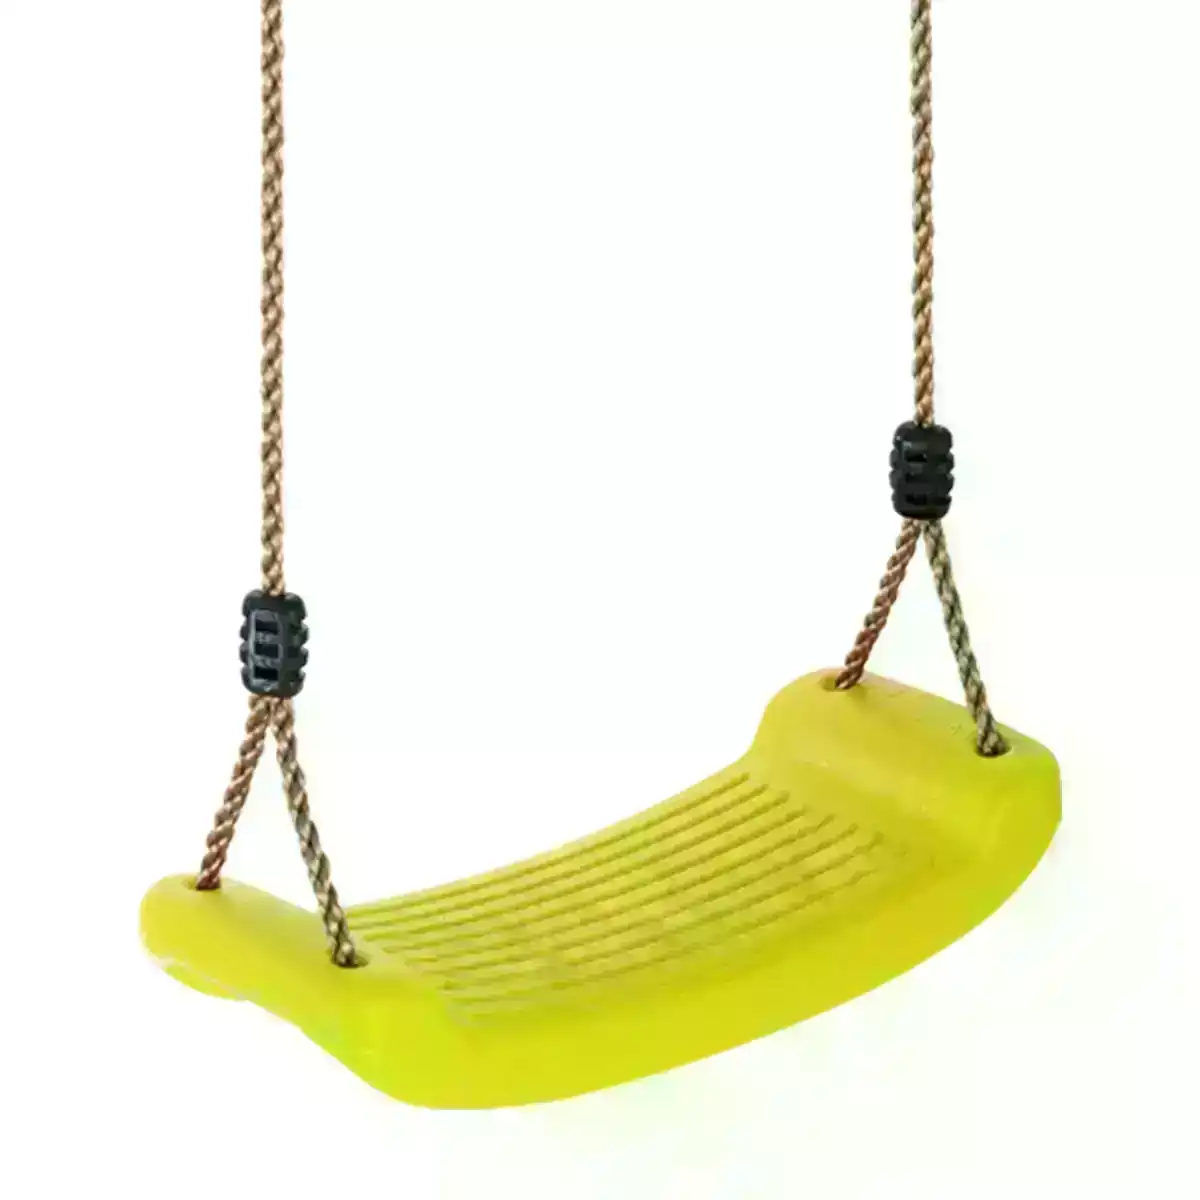 Lifespan Kids Seat Swing - Yellow